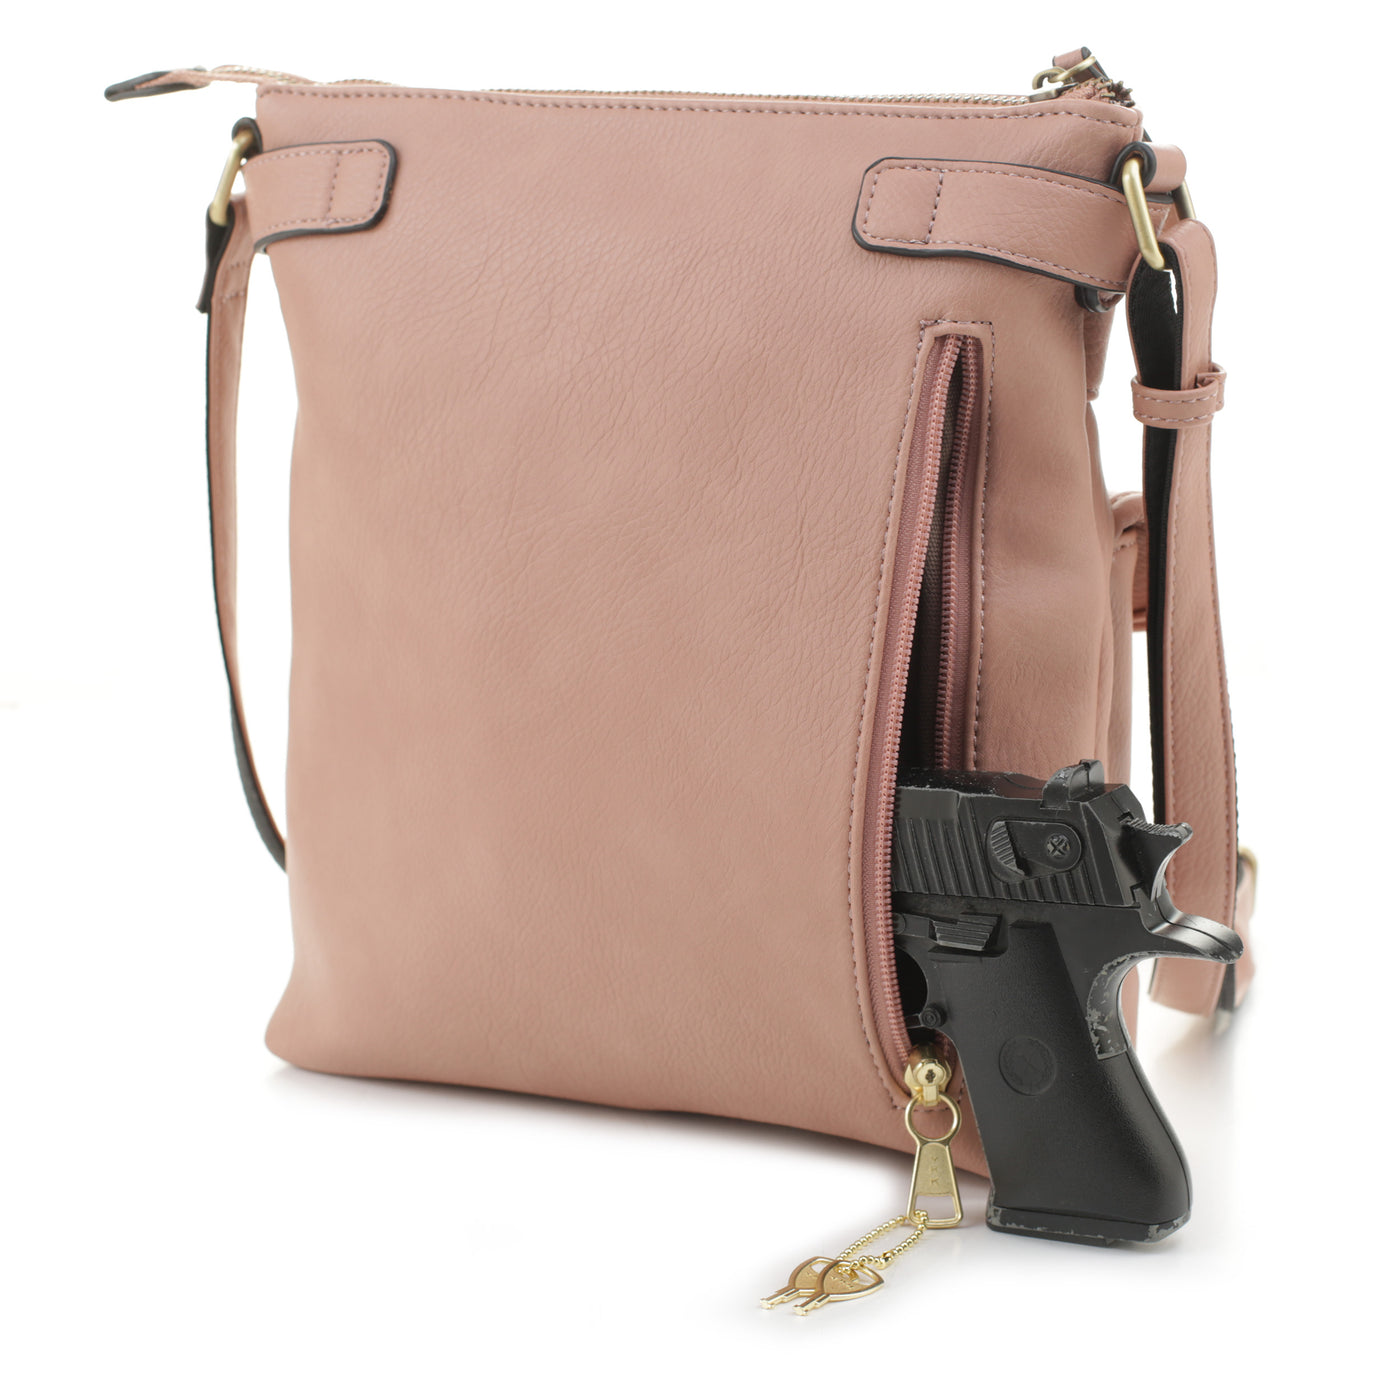 Jessie & James Handbags Robin Concealed Carry Lock and Key Crossbody Bag - Black